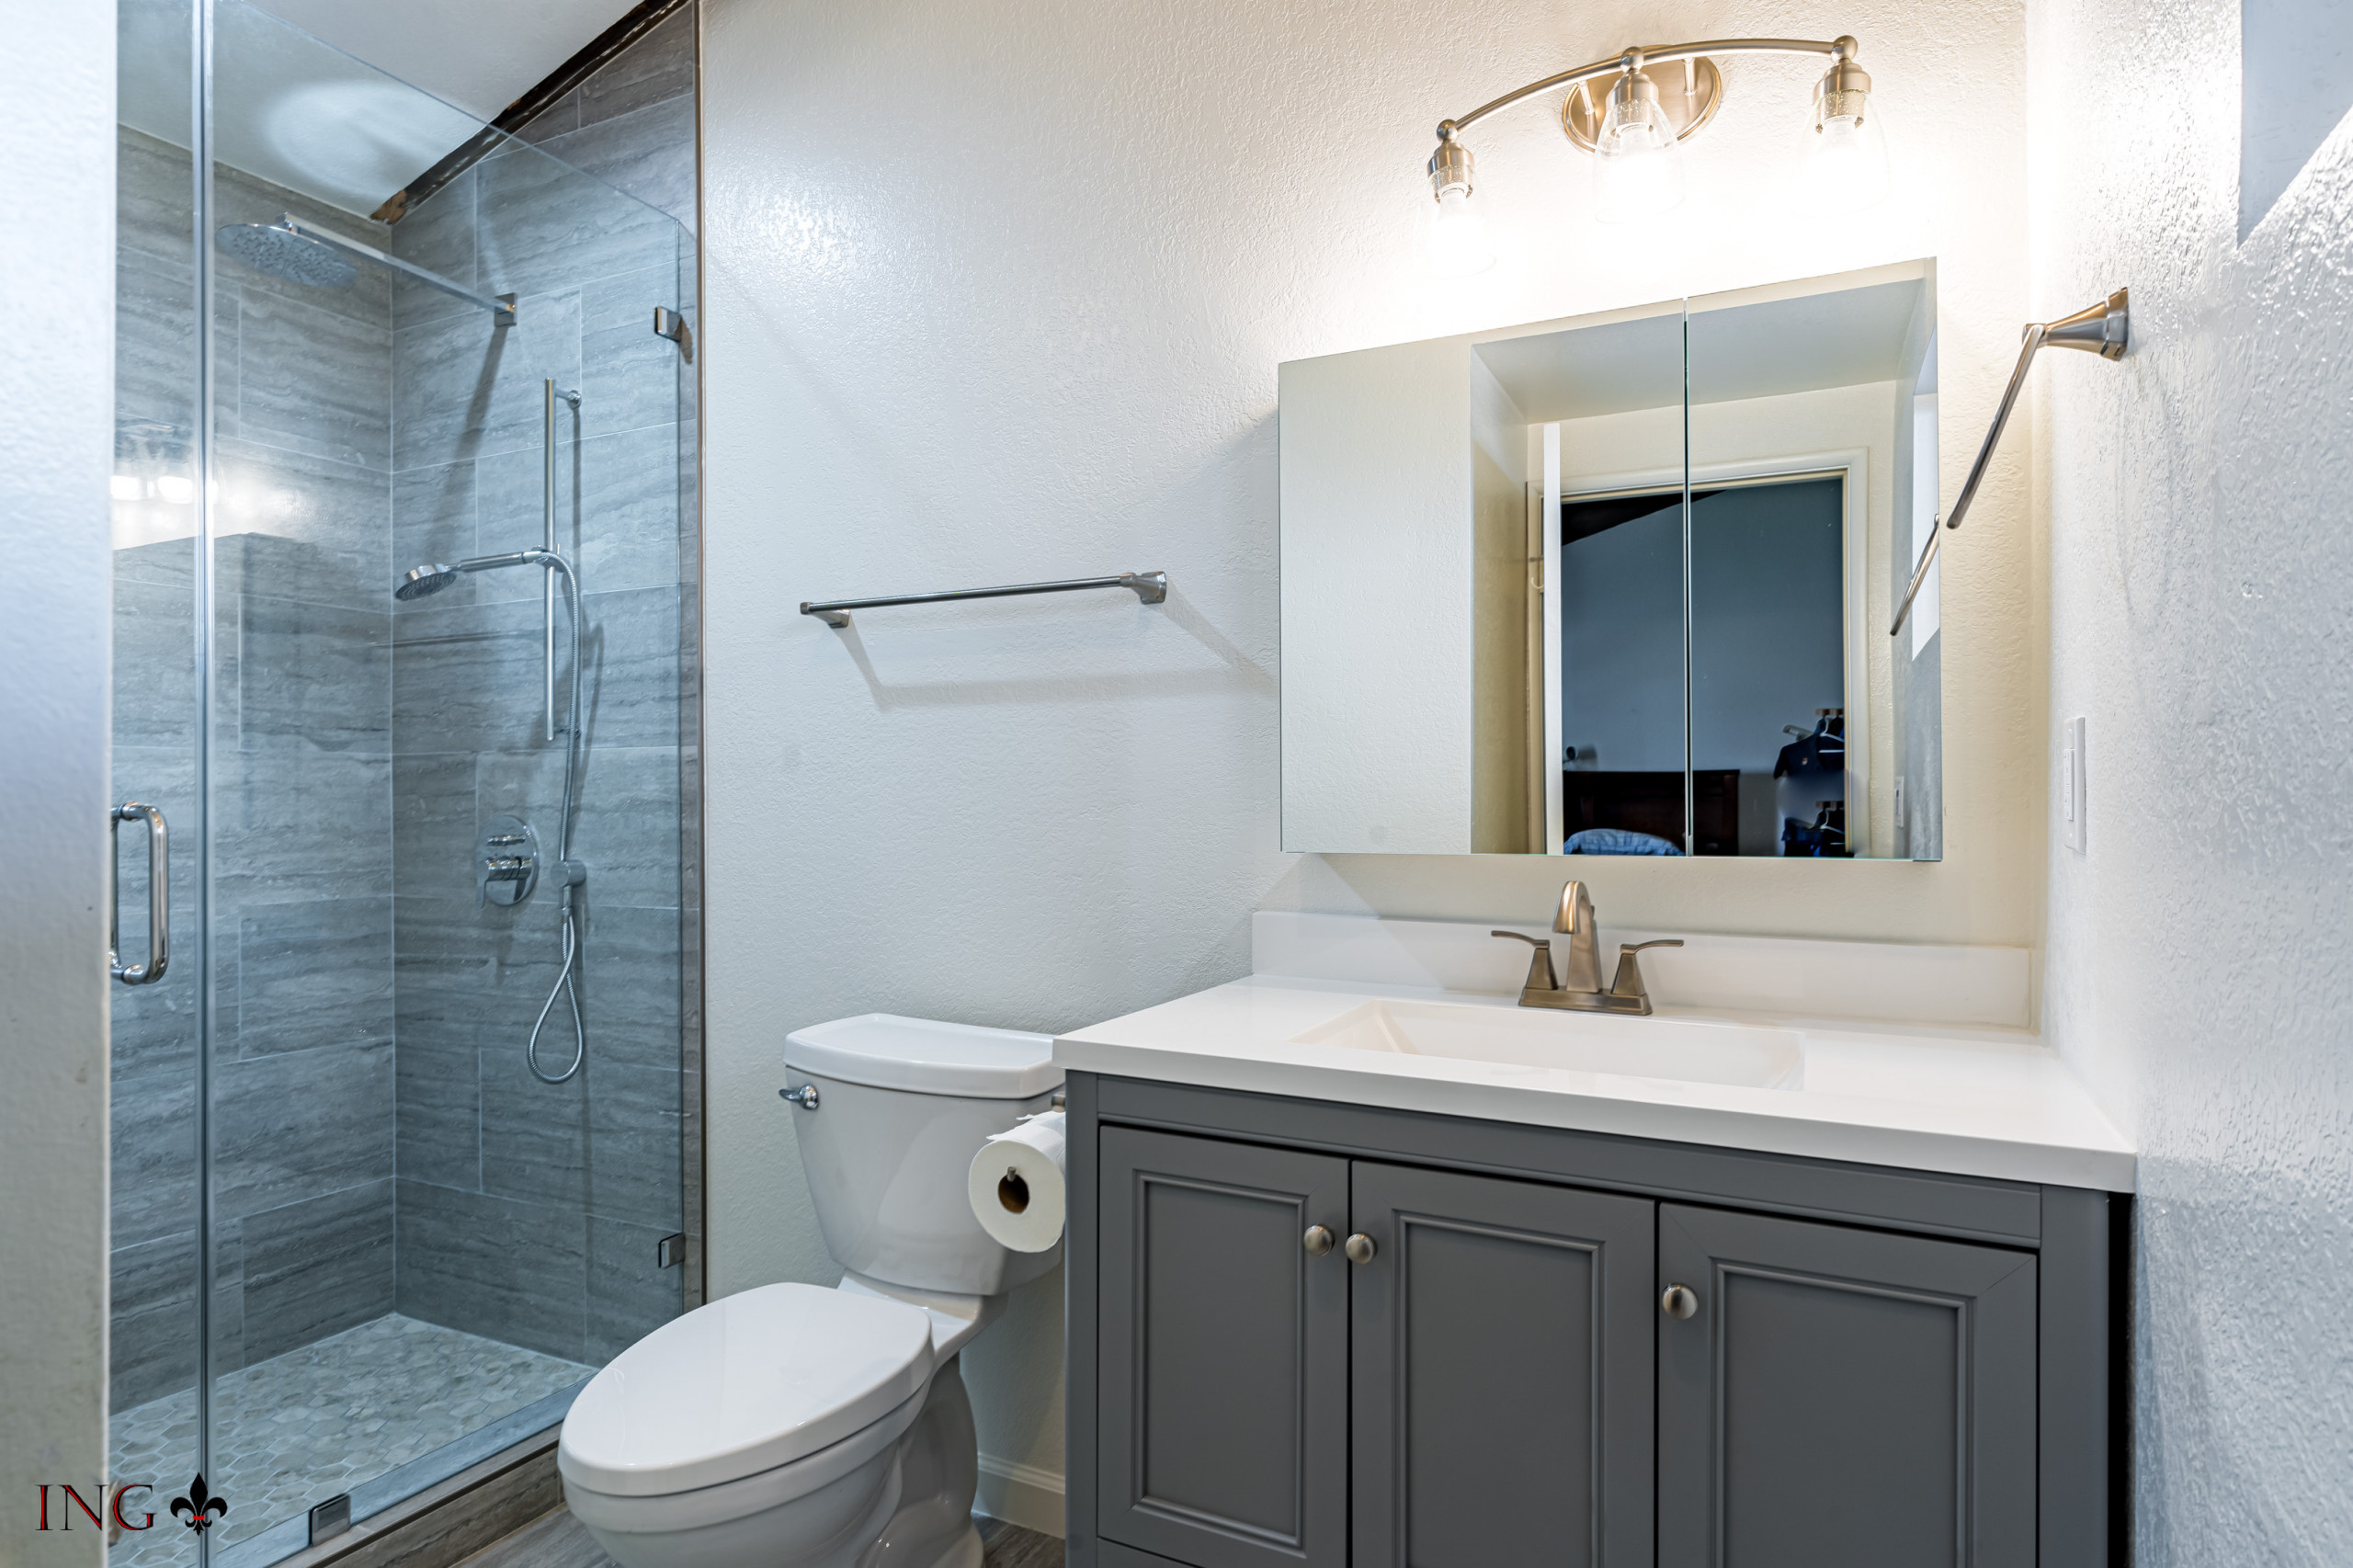 Shower Tile & Enclosure; Vanity, Mirror & Lighting; Toilet Installation